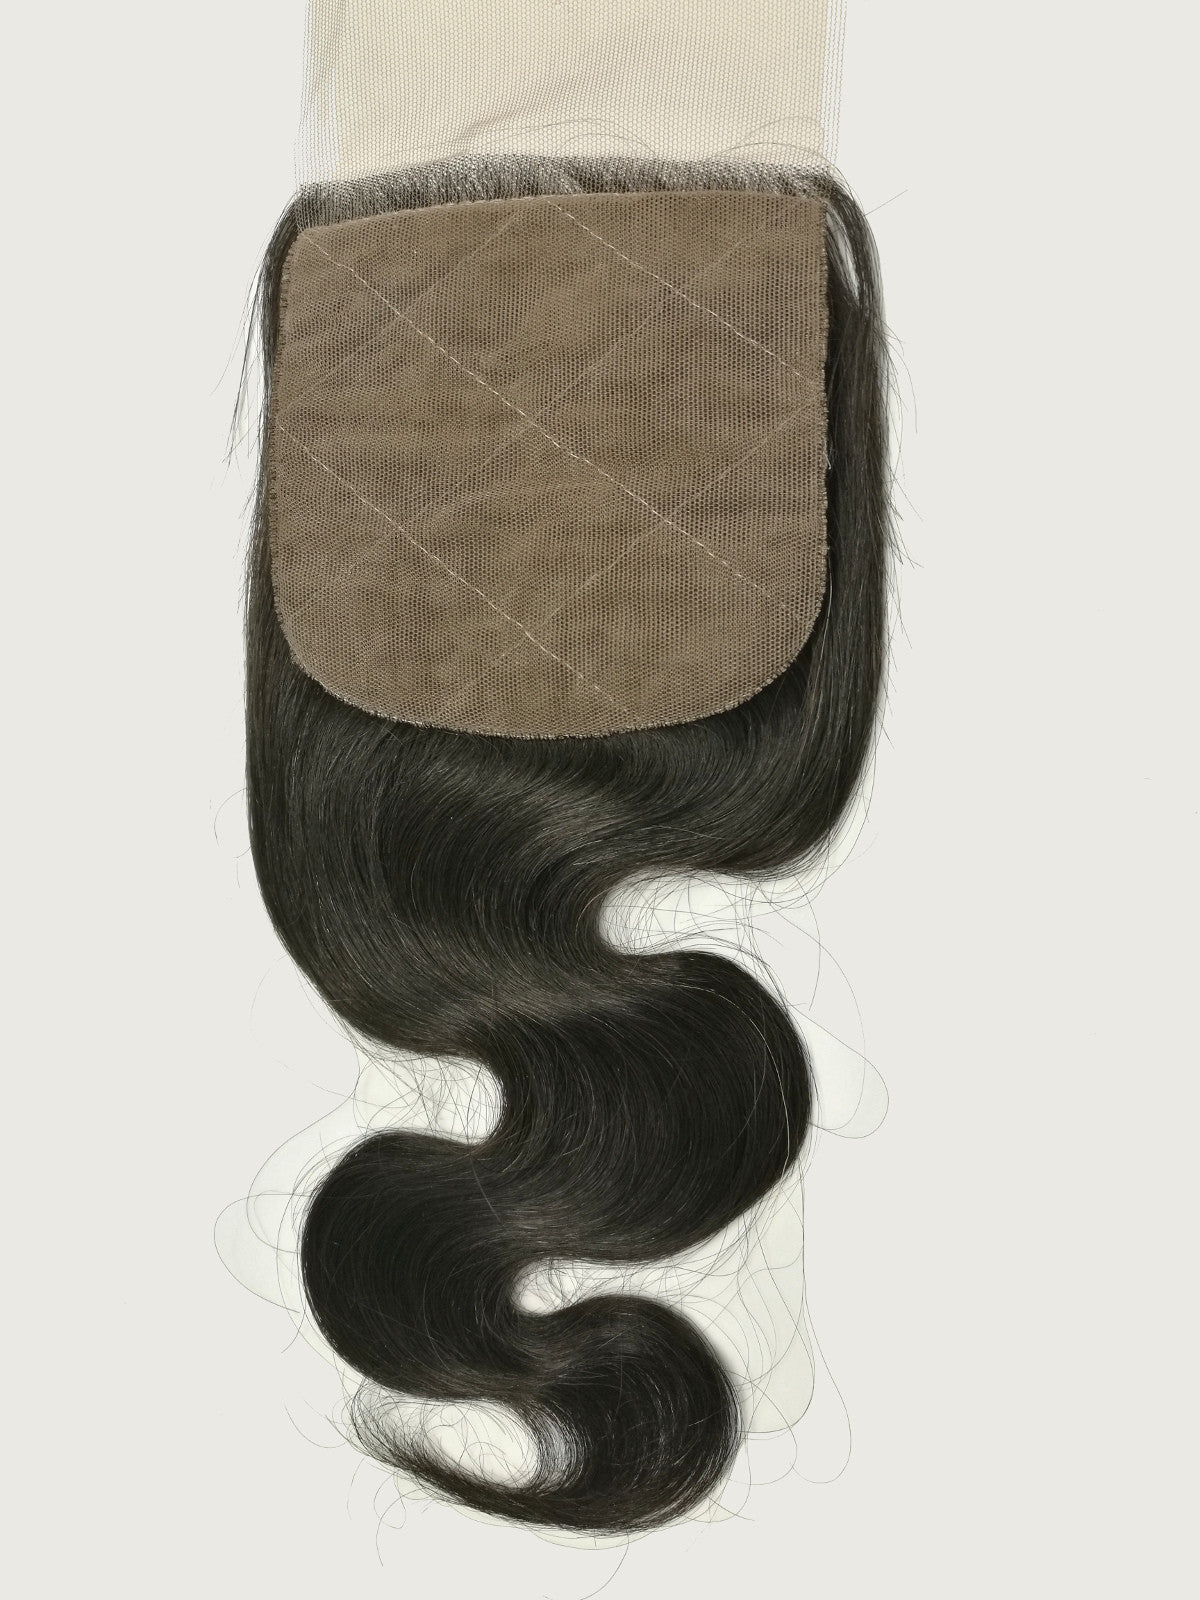 4"x4" Silk Lace Closure - BODY WAVE - Euryale Virgin Hair